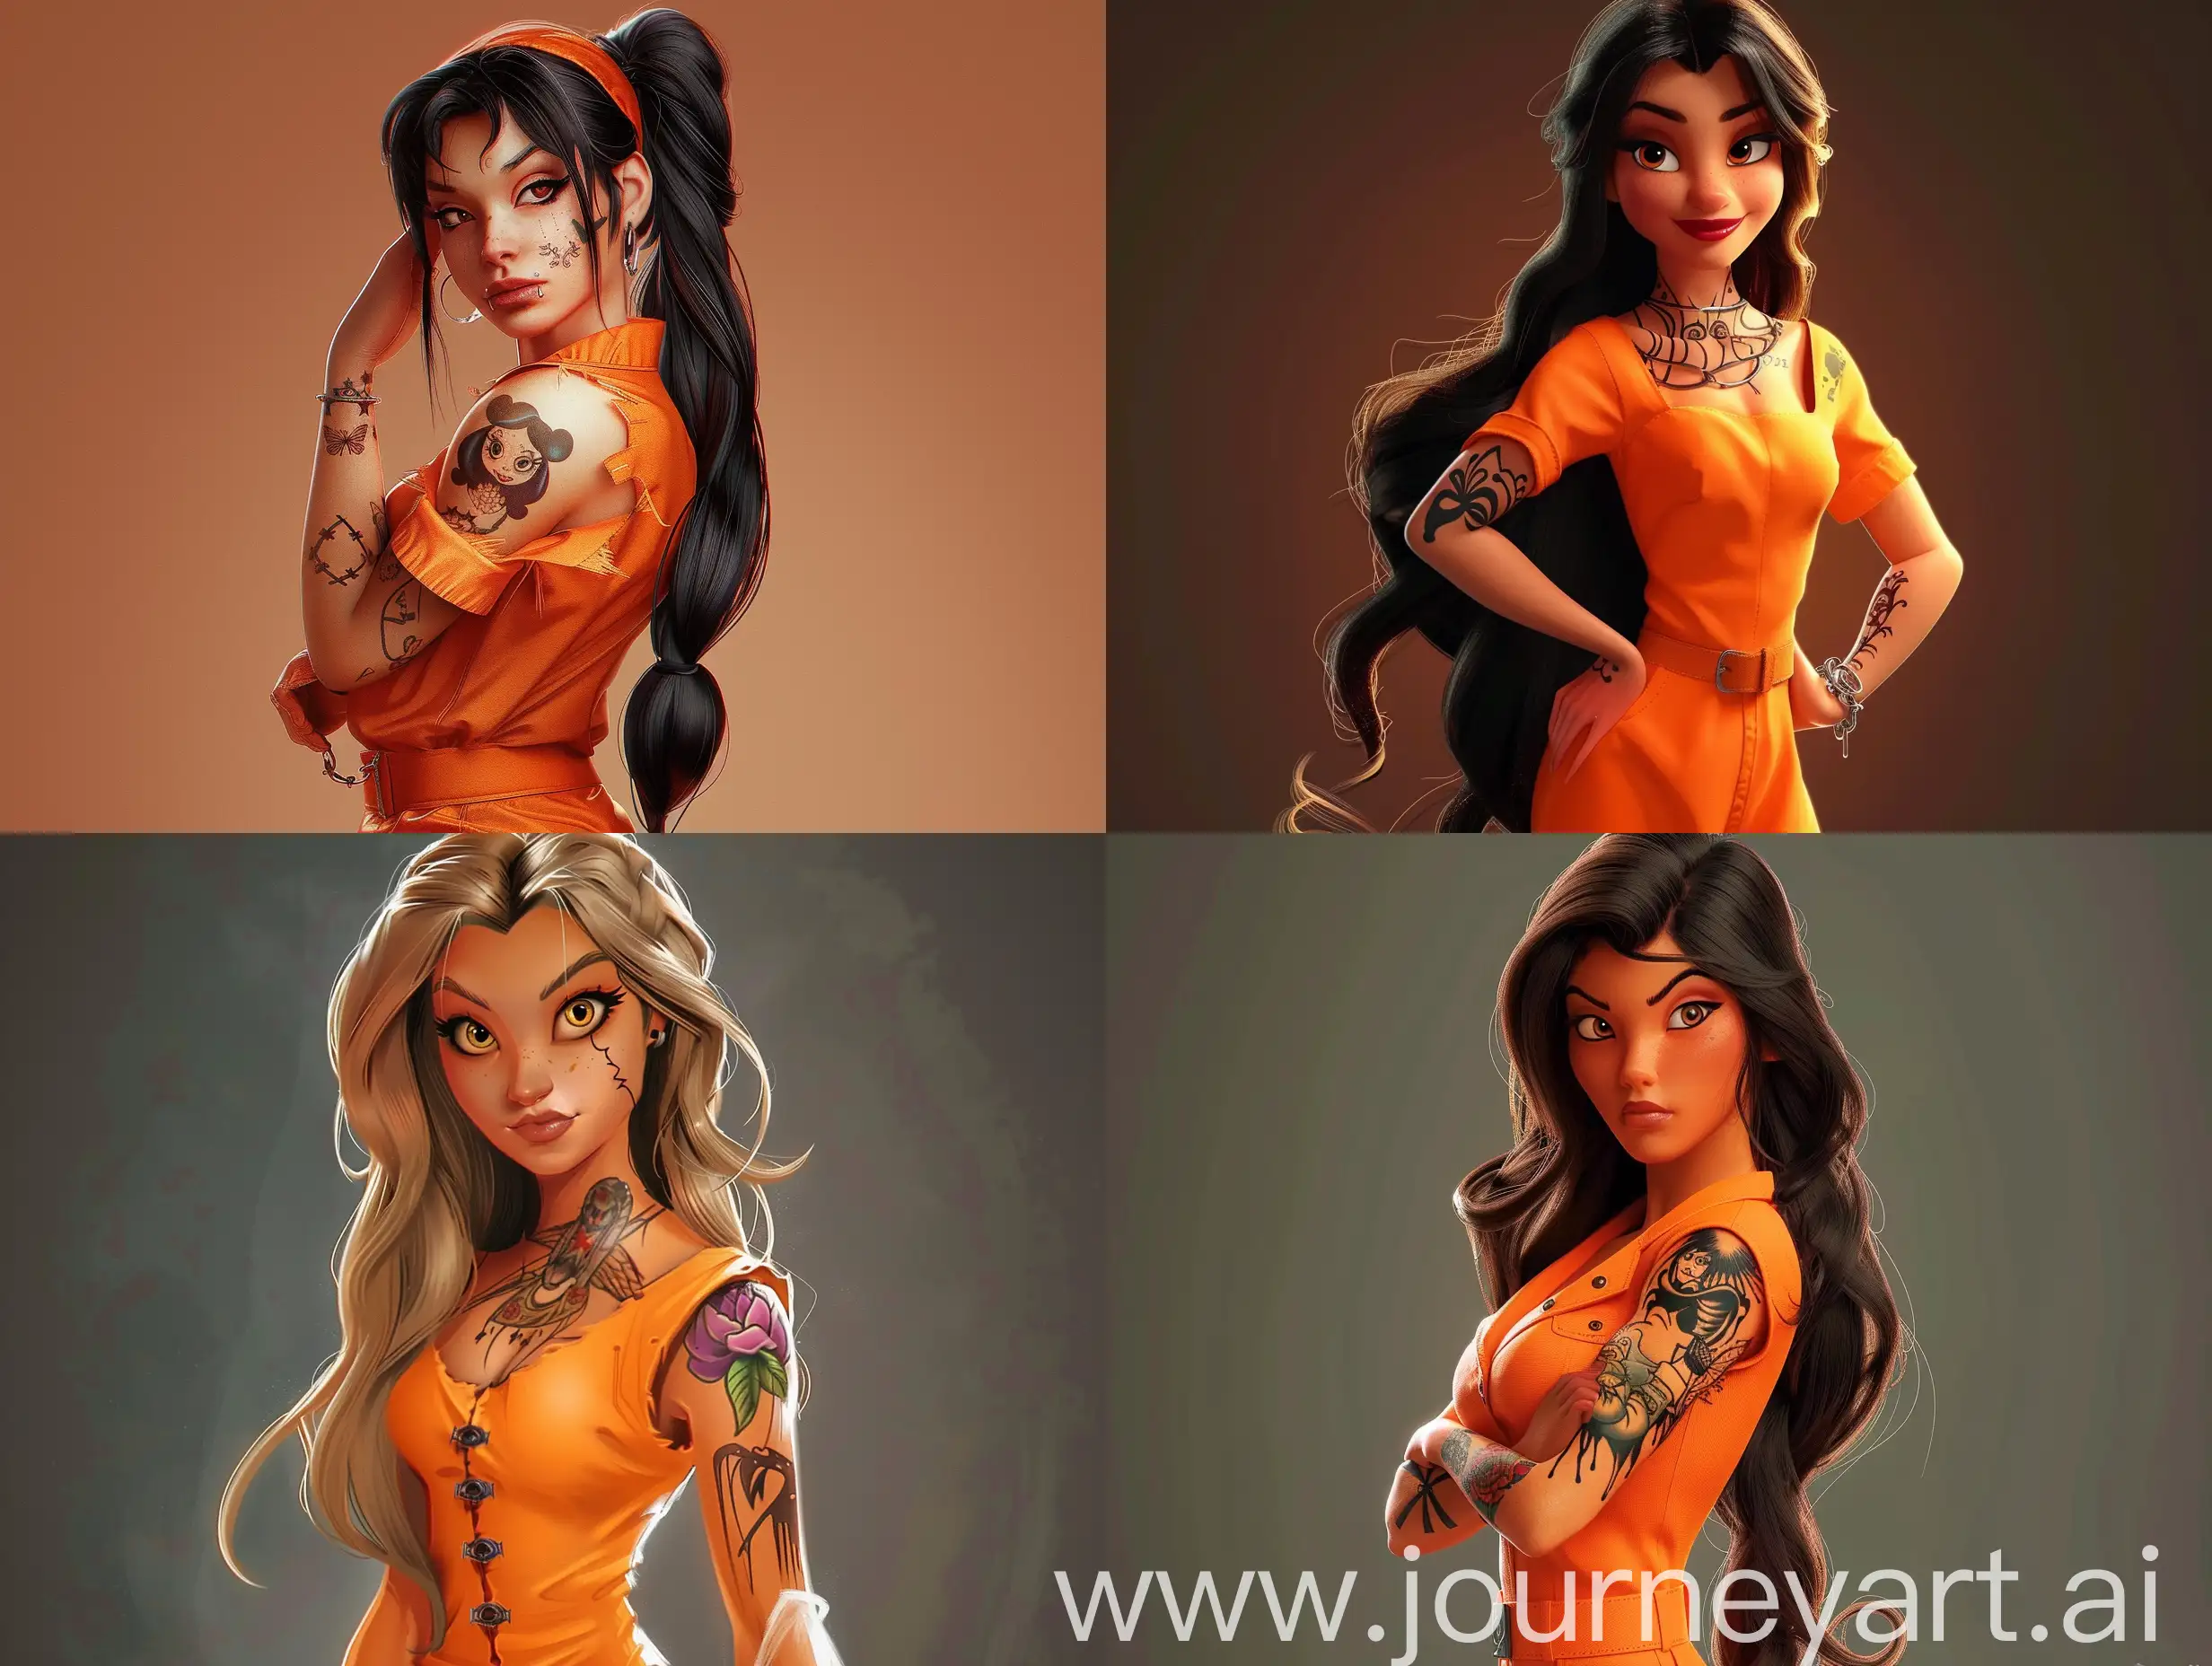 Disney princess in orange prison uniform, tattoo, evil look